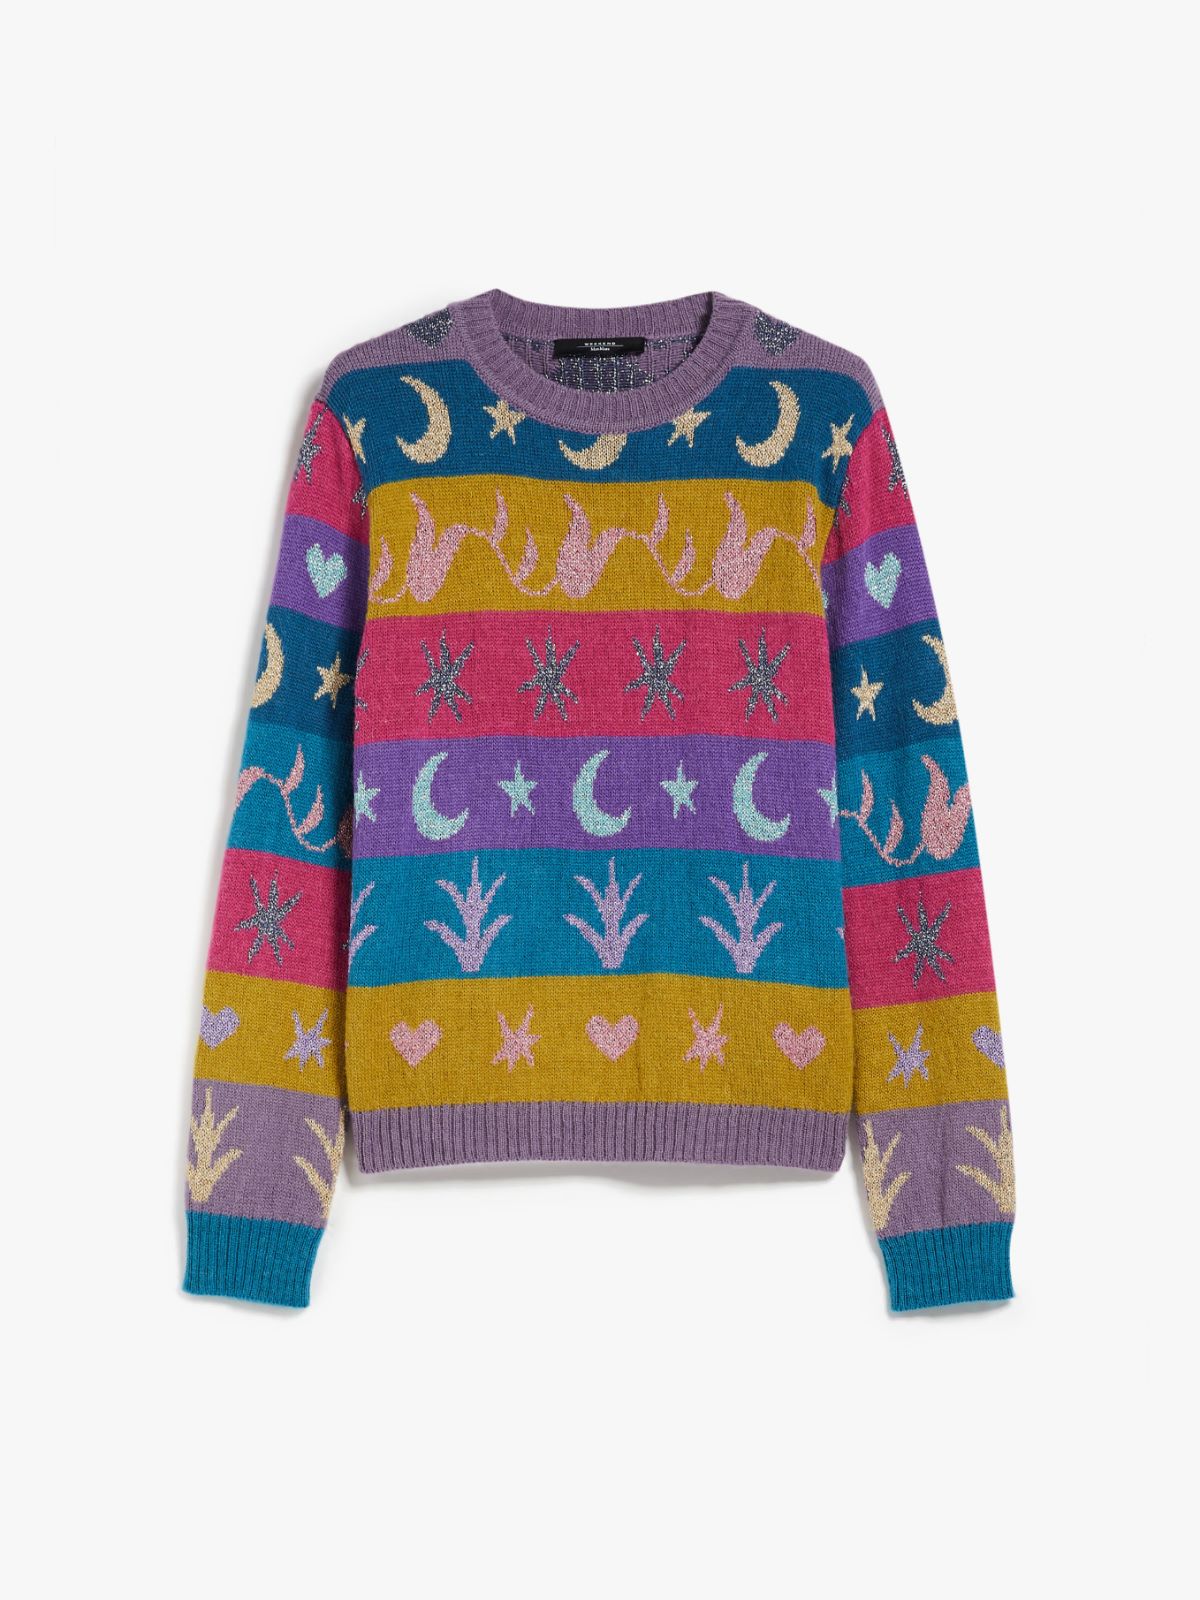 Jacquard-knit alpaca, wool and lurex sweater - MULTICOLOUR - Weekend Max Mara - 6